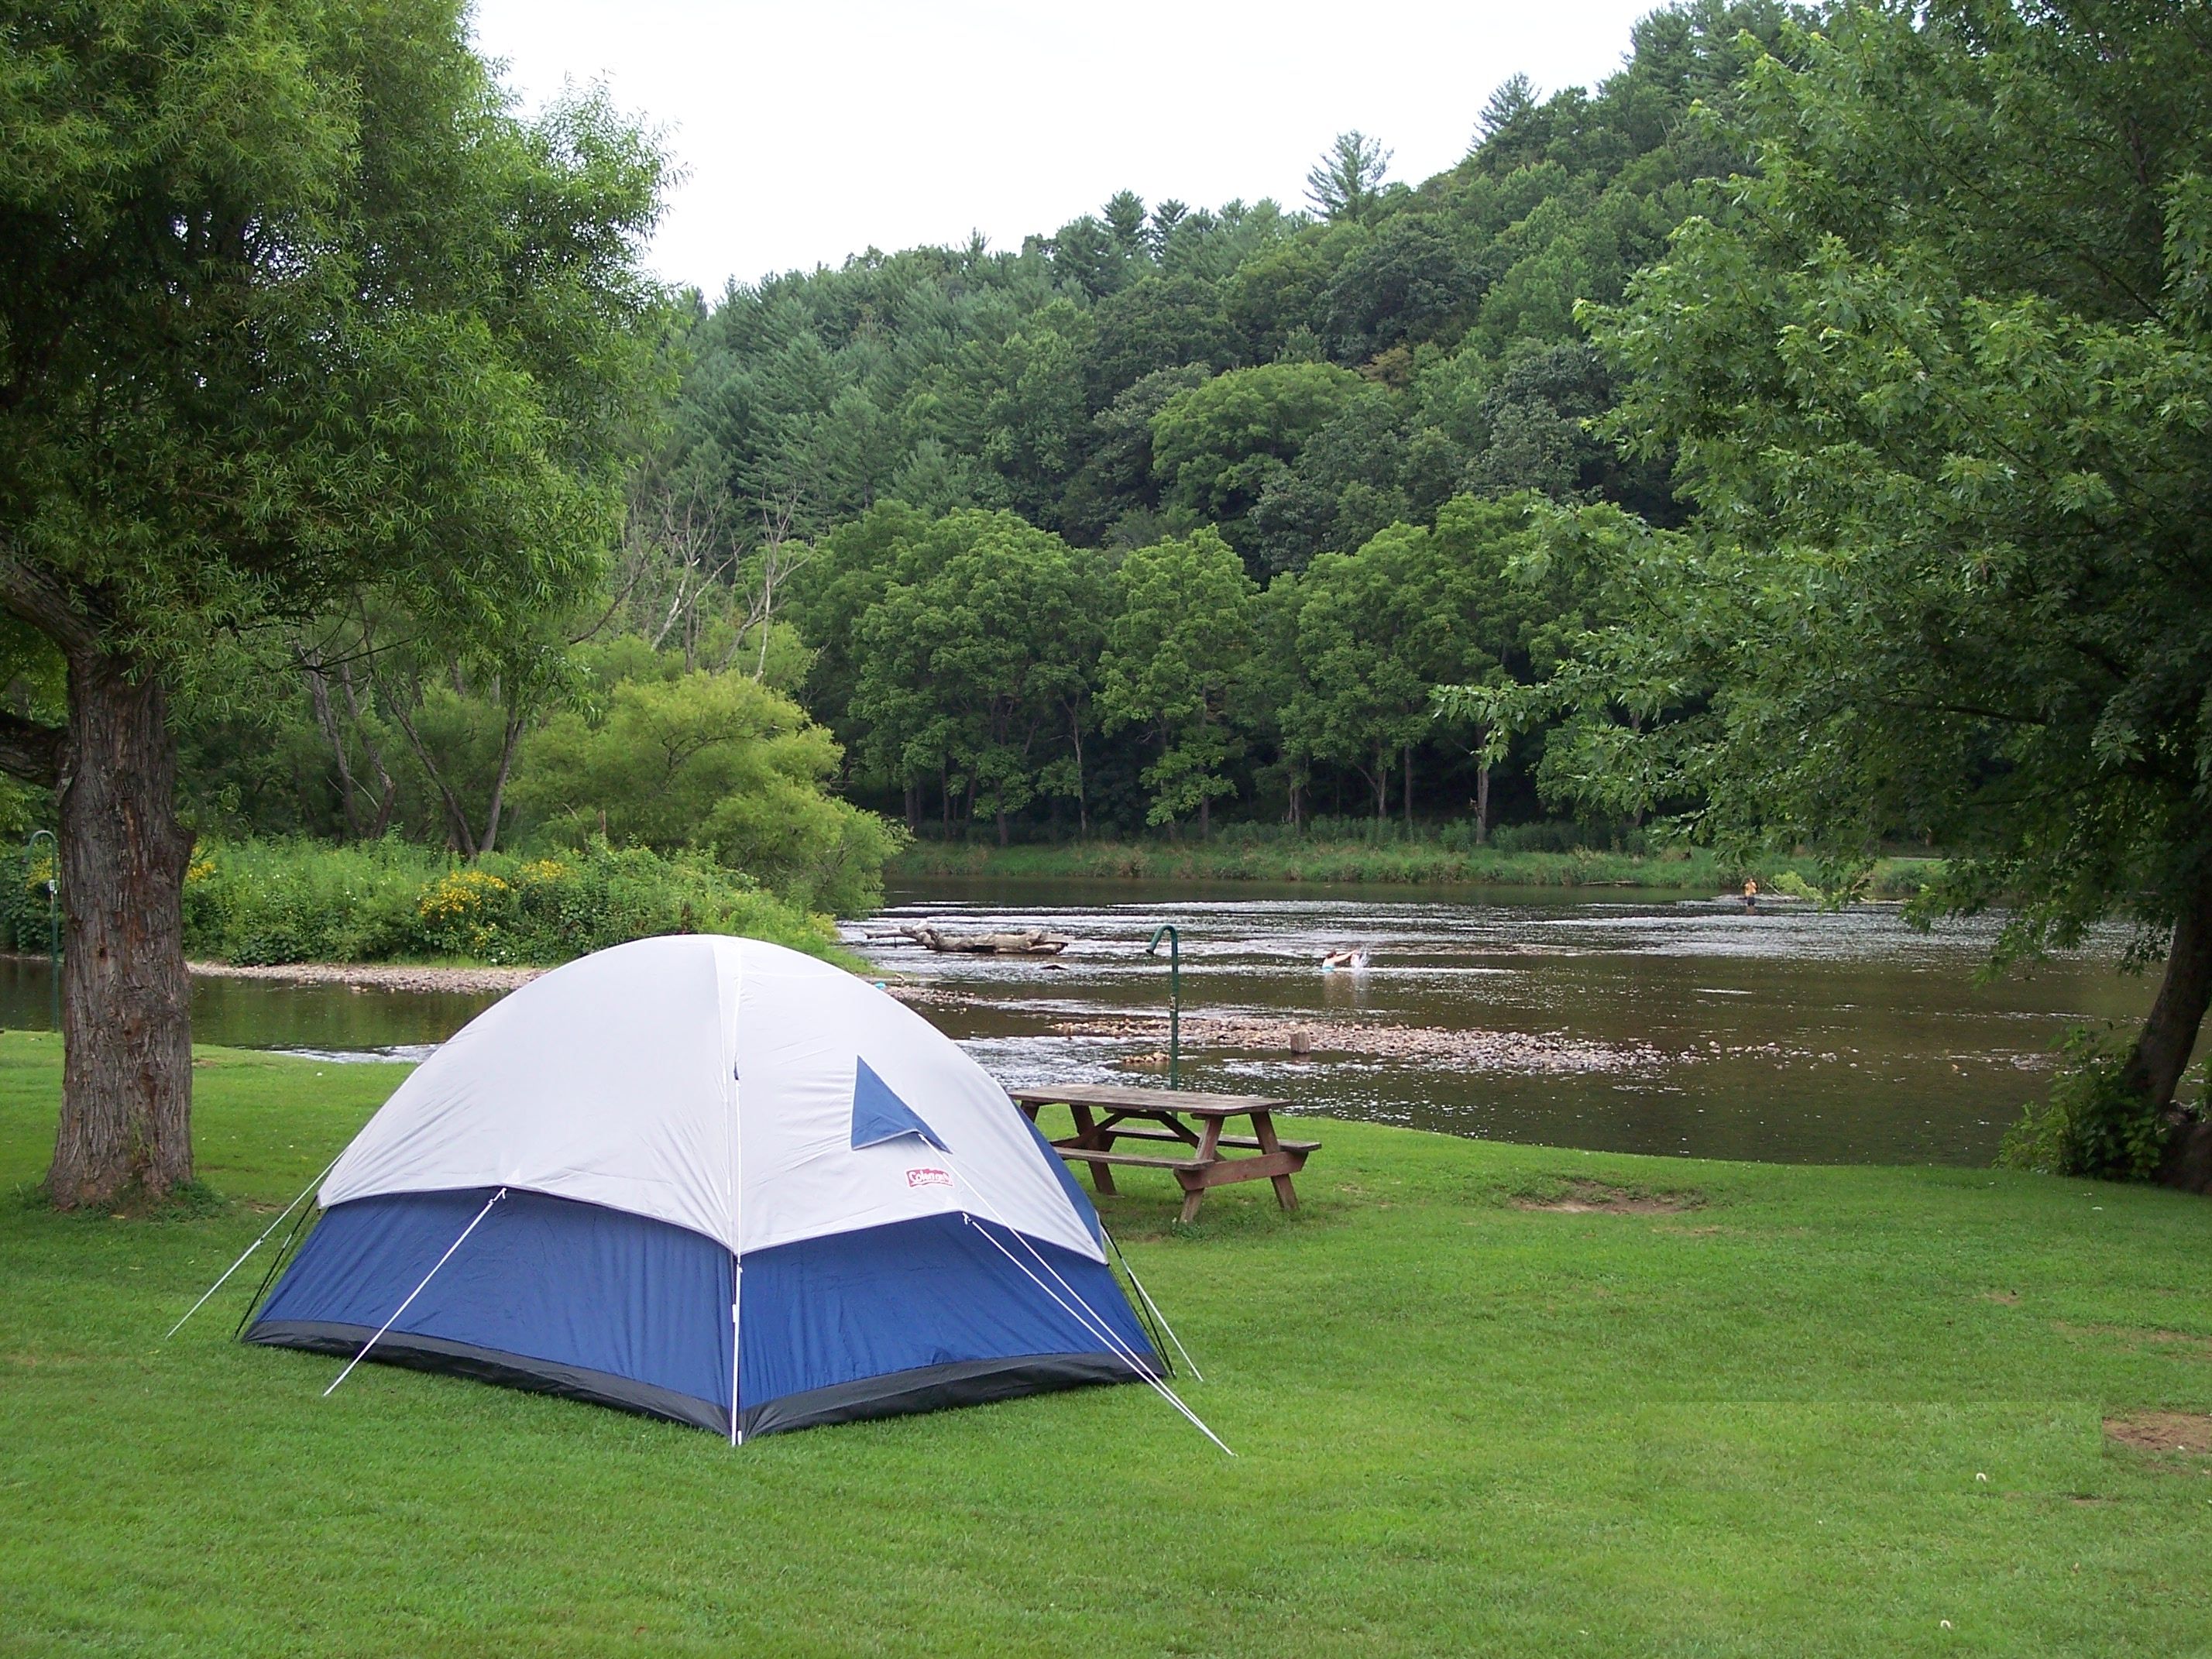 Camping site. Кемпинг. Палатка Camp site. Footpath Outdoor Pursuits палатка. Snaerfelt Campsite.